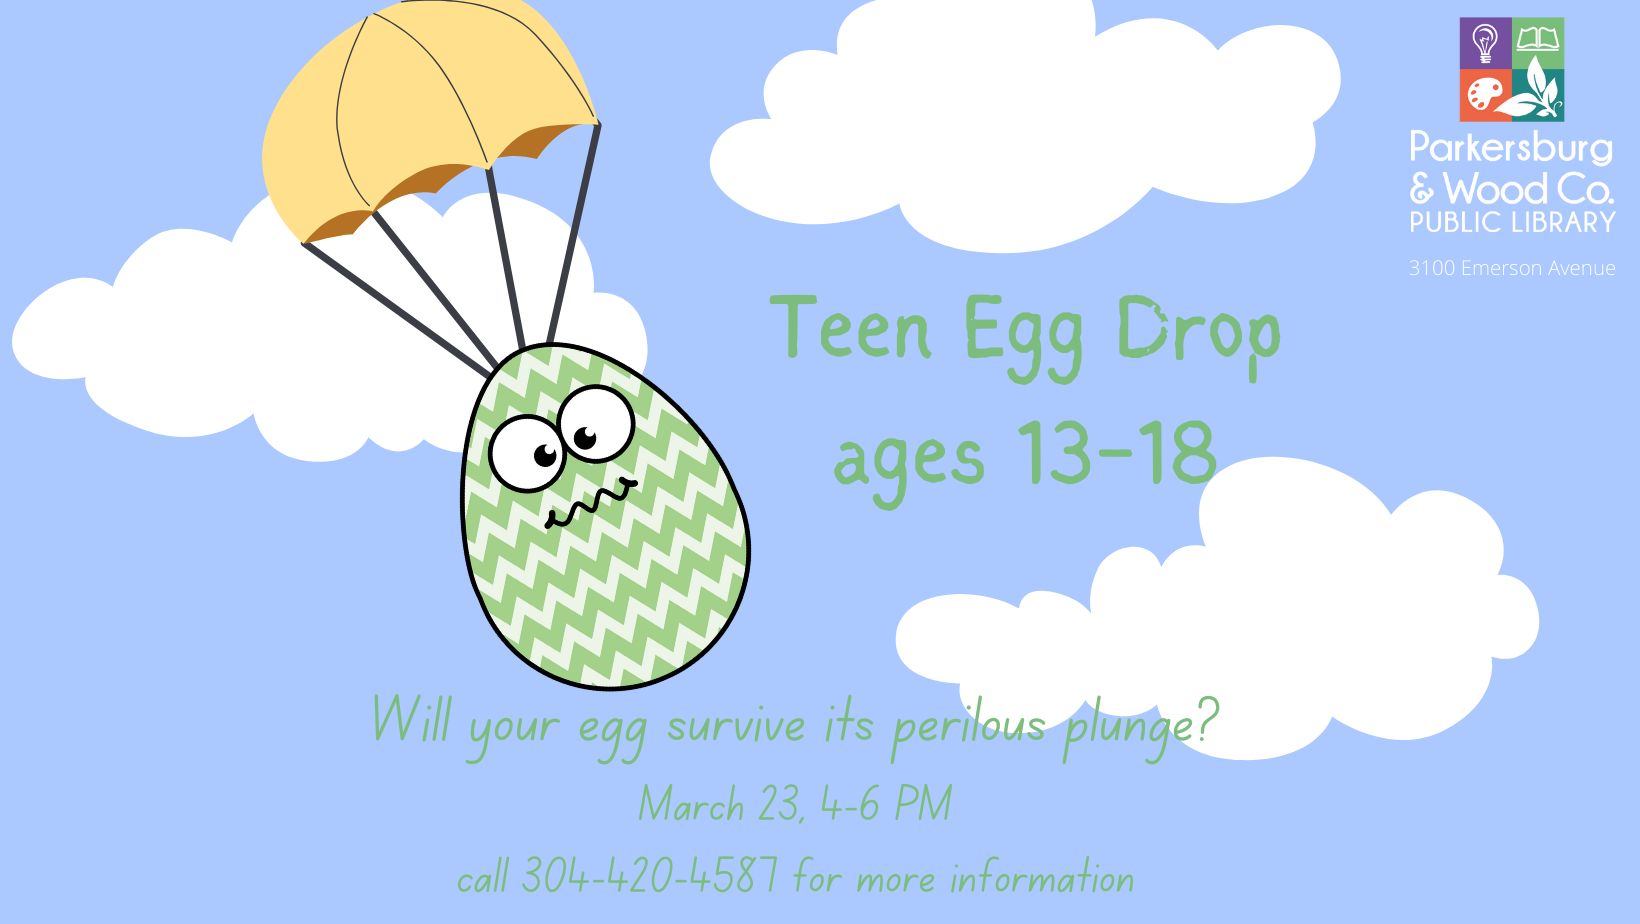 Teen Egg Drop at Emerson